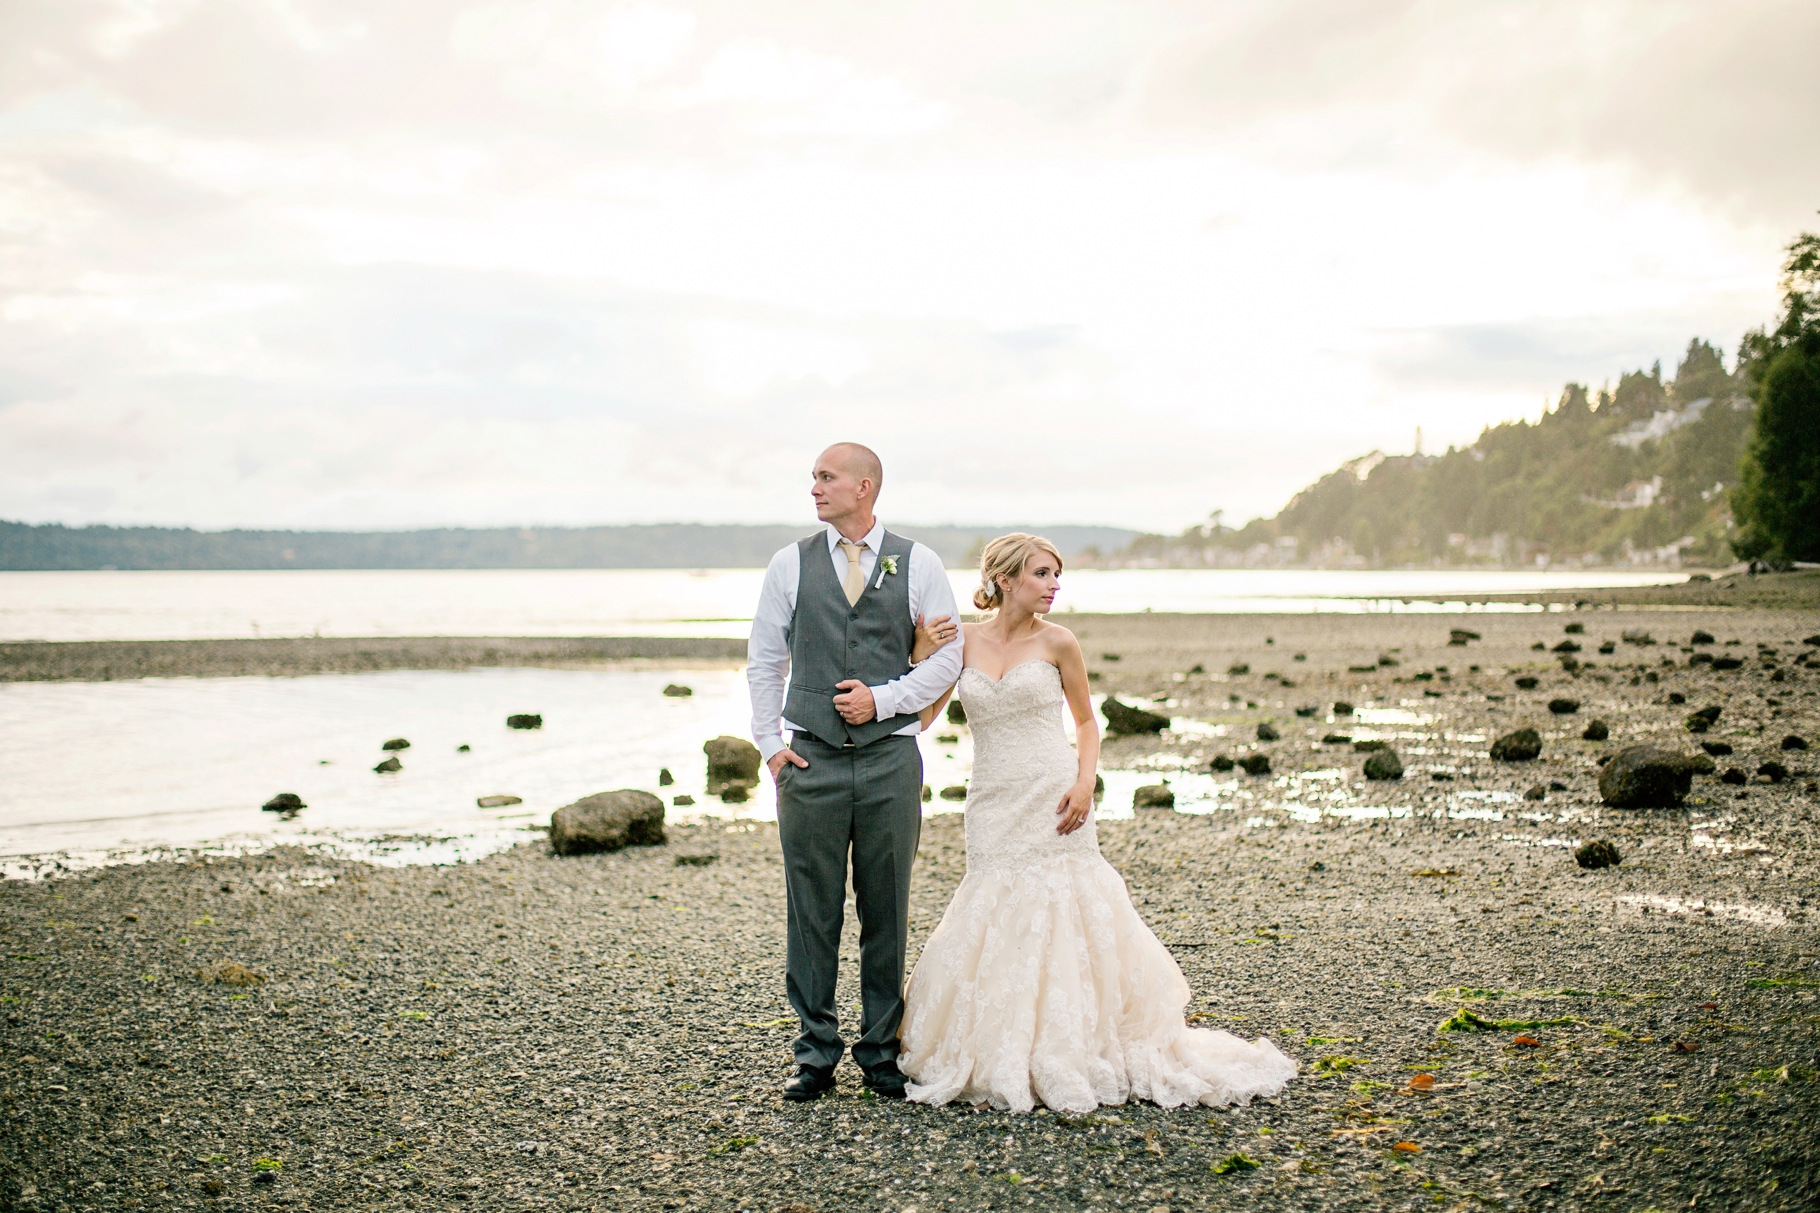 44-Normandy-Cove-Beach-Wedding-Photographer-Bride-Groom-Romantic-Rain-Sunset-Seattle-Wedding-Photography-Northwest